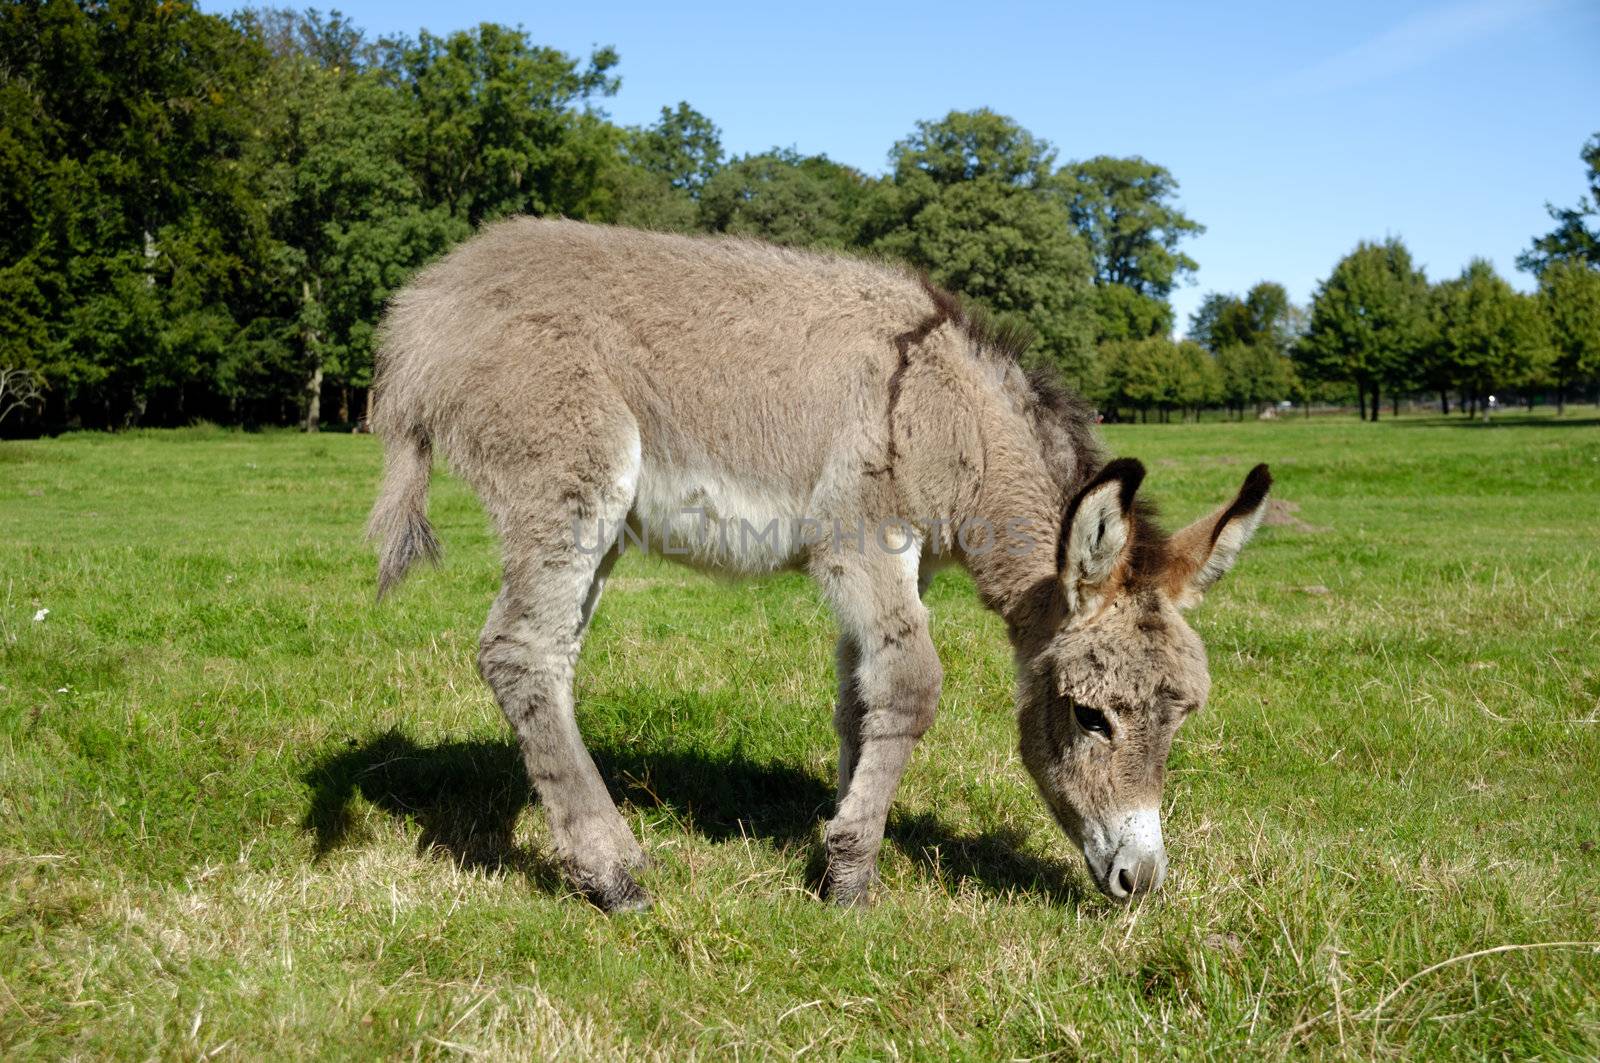 Donkey eating grass by cfoto